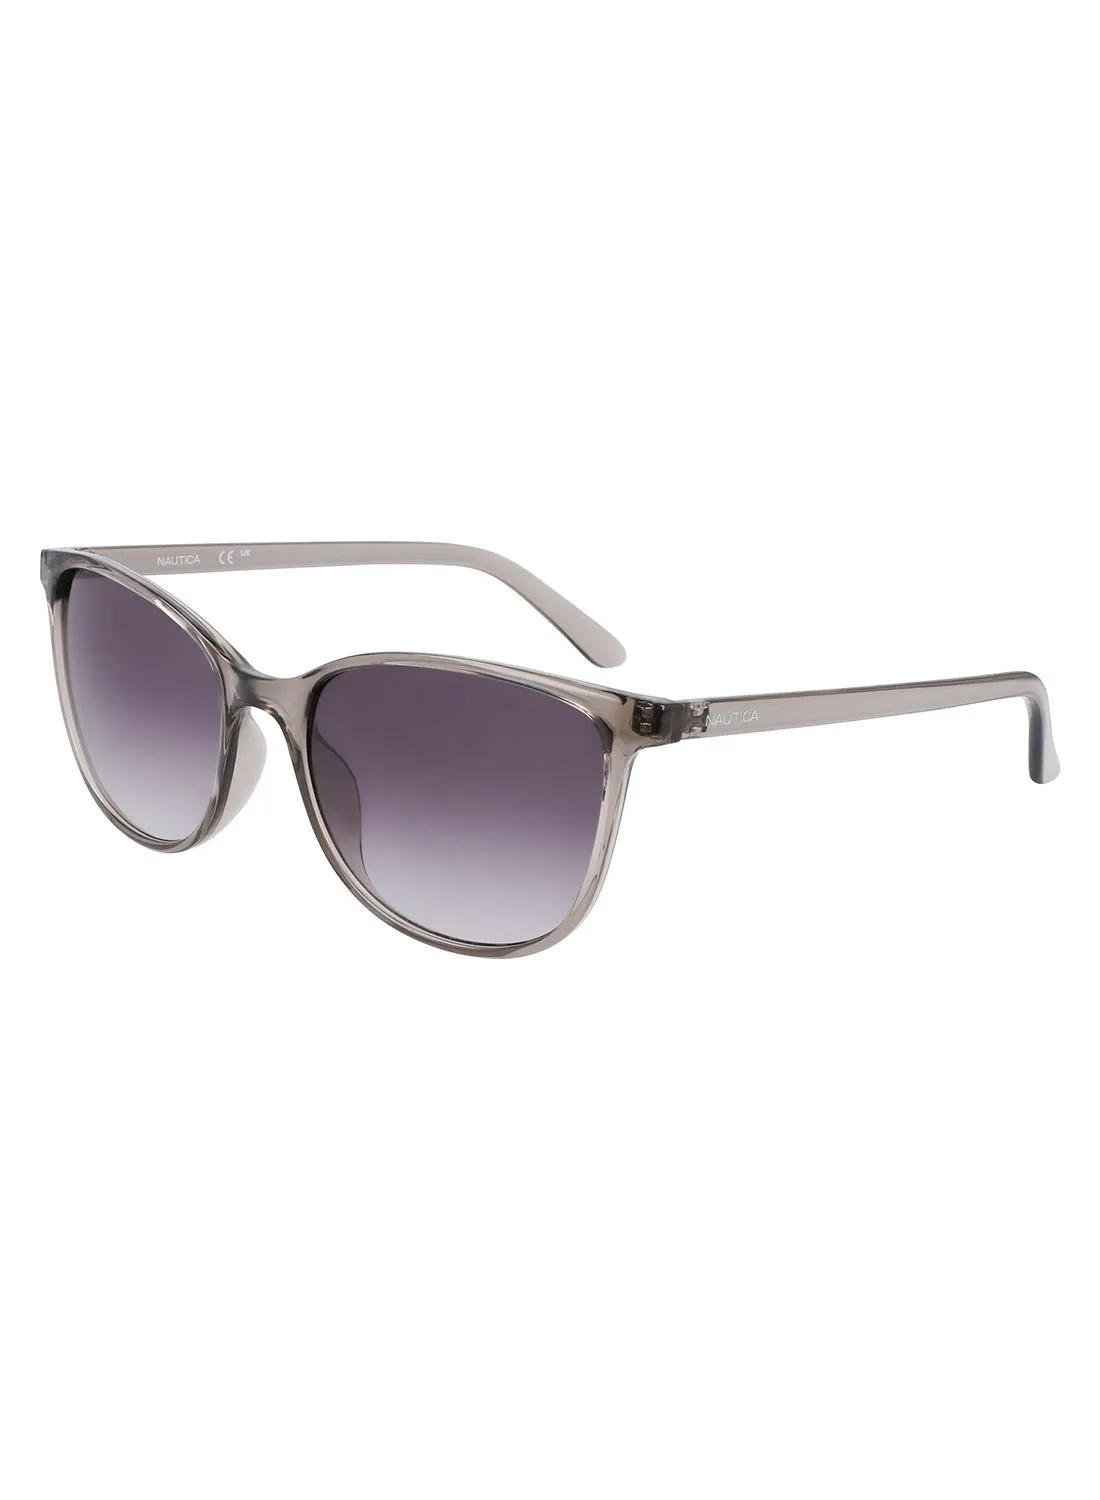 NAUTICA Women's Rectangular Sunglasses - N2243S-070-5618 - Lens Size: 56 Mm